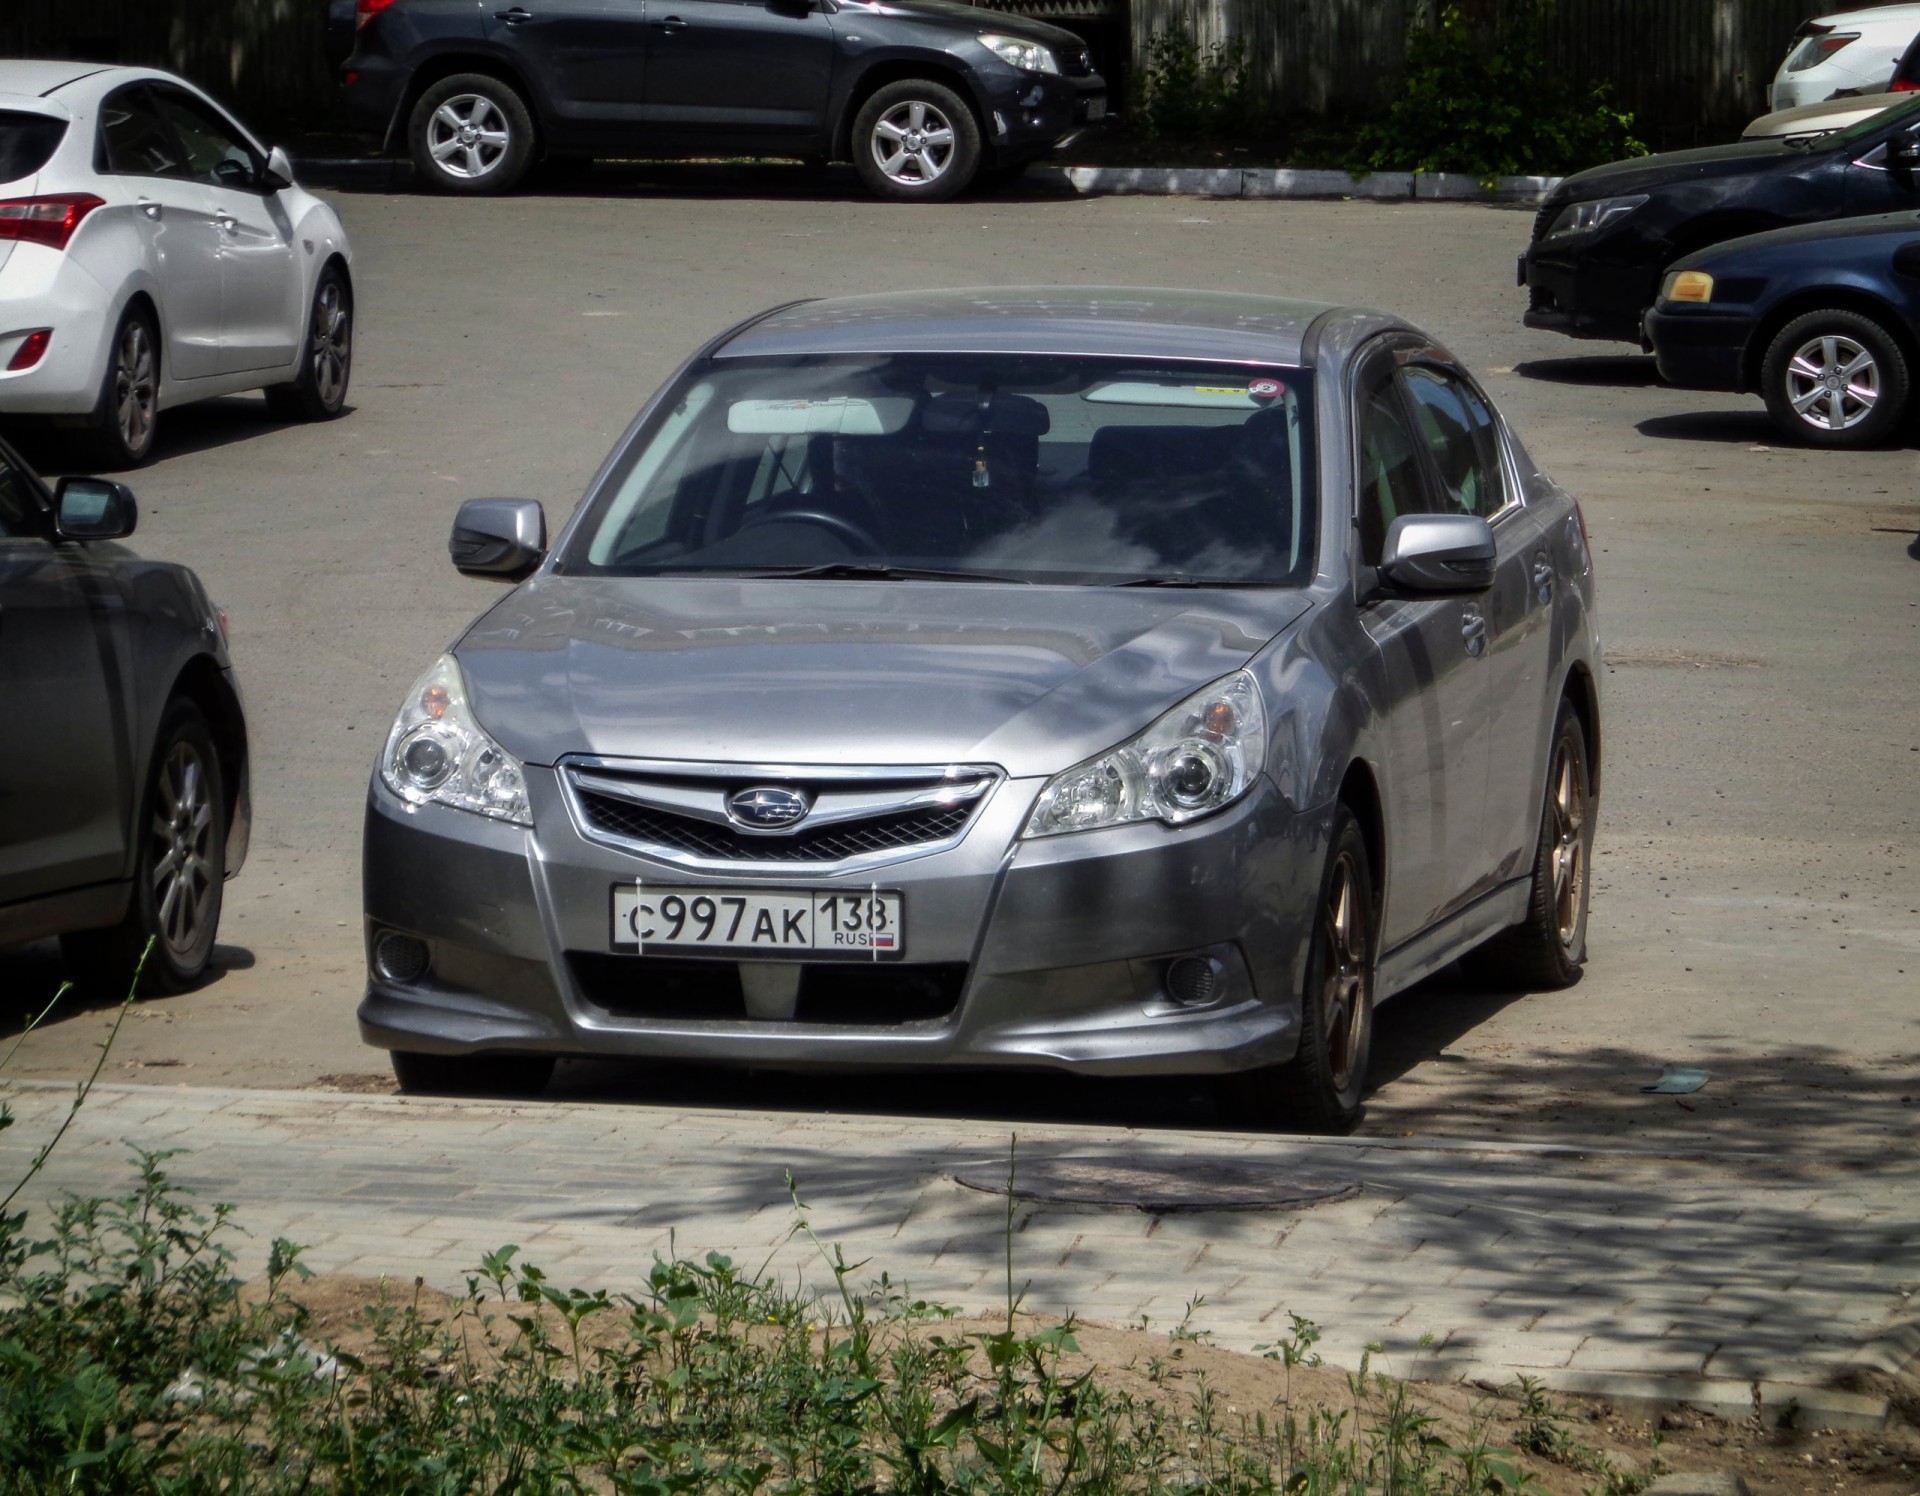 2011 Subaru Legacy fifth generation at a parking lot